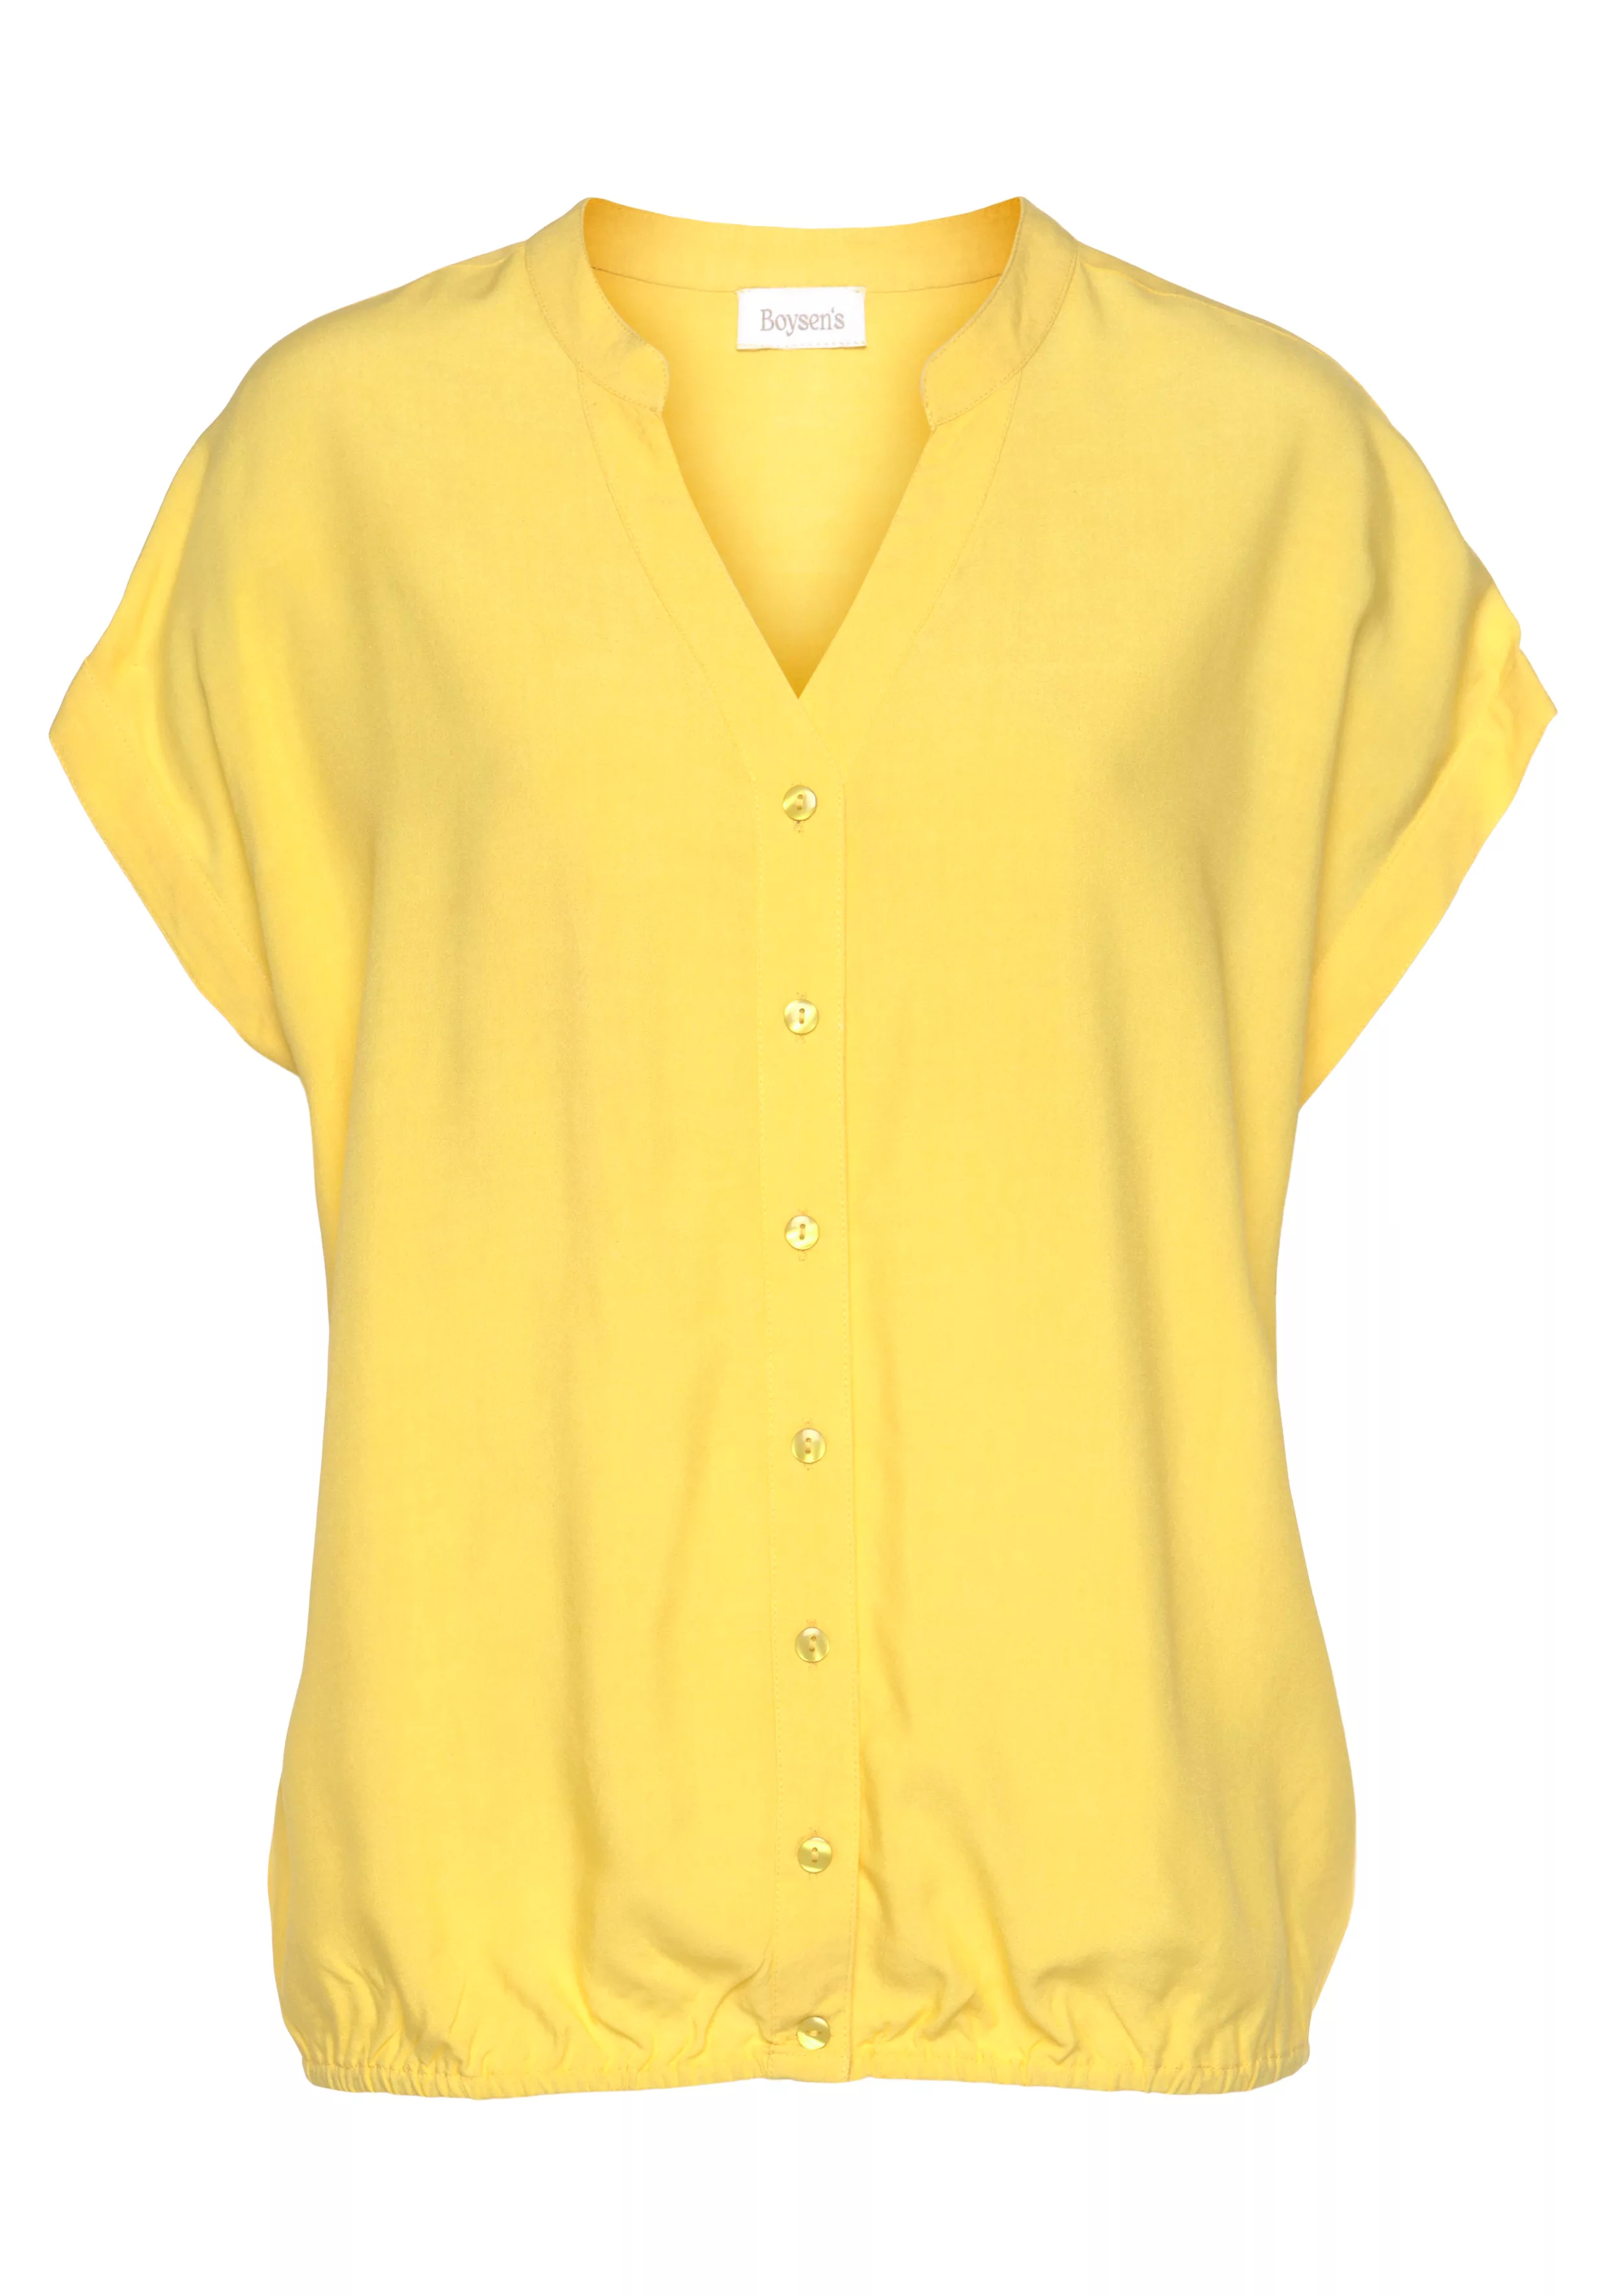 Boysens Hemdbluse, im Oversized-Style mit Ballonsaum günstig online kaufen